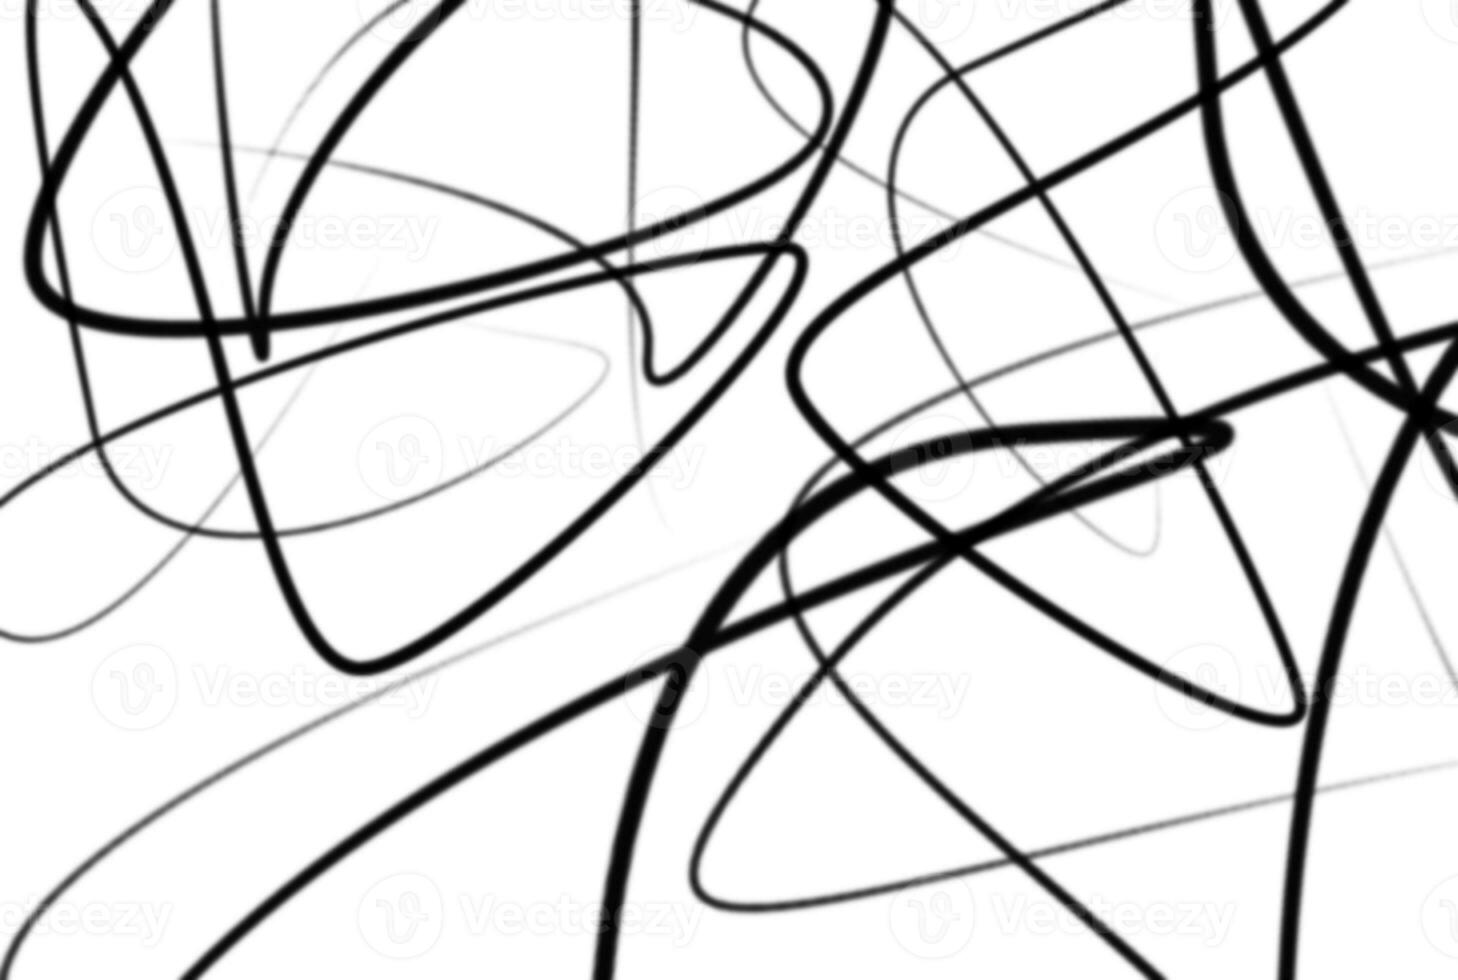 Waved lines texture wavy background futuristic network art striped flow artwork photo